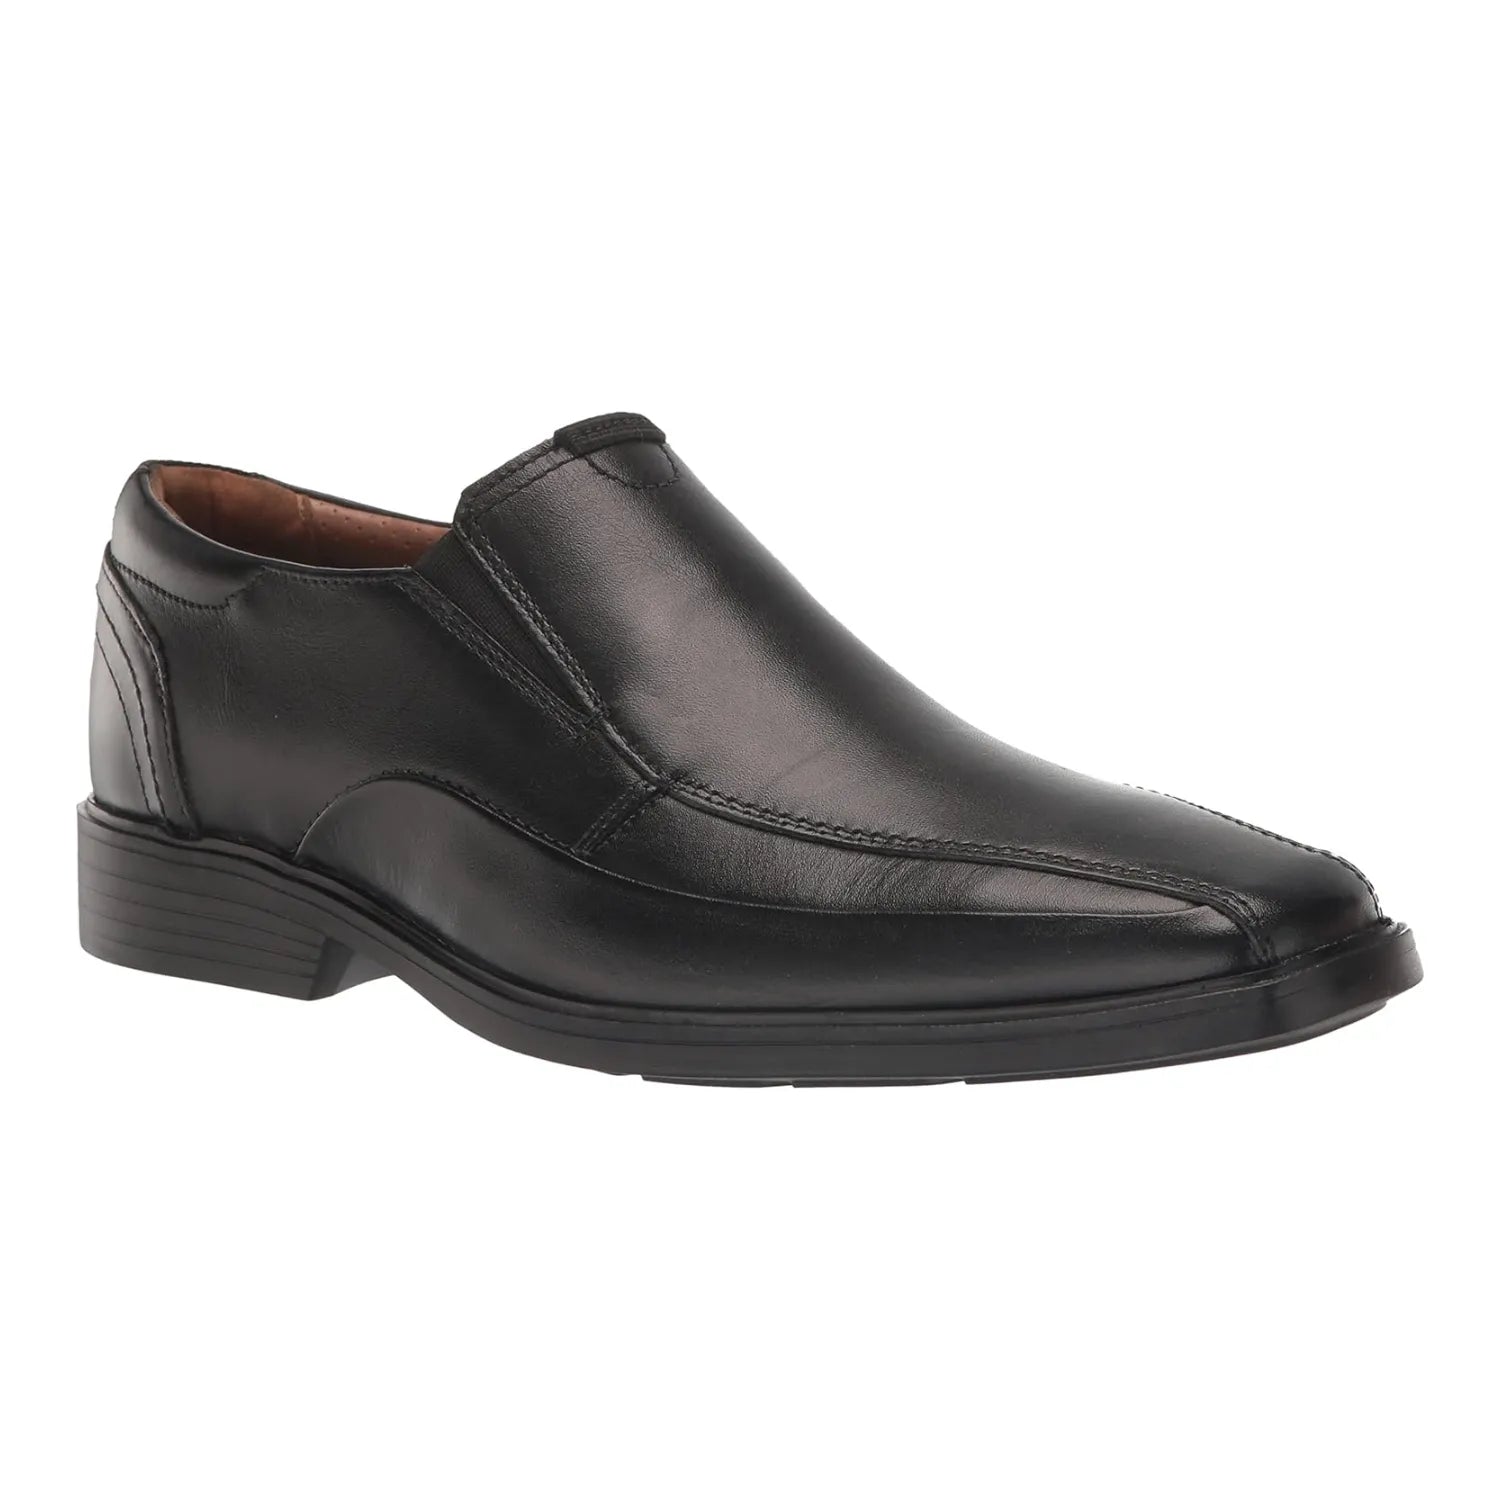 Clarks Men's Black Pure Leather Slip-On Shoes - Easy Wear Slip-Ons